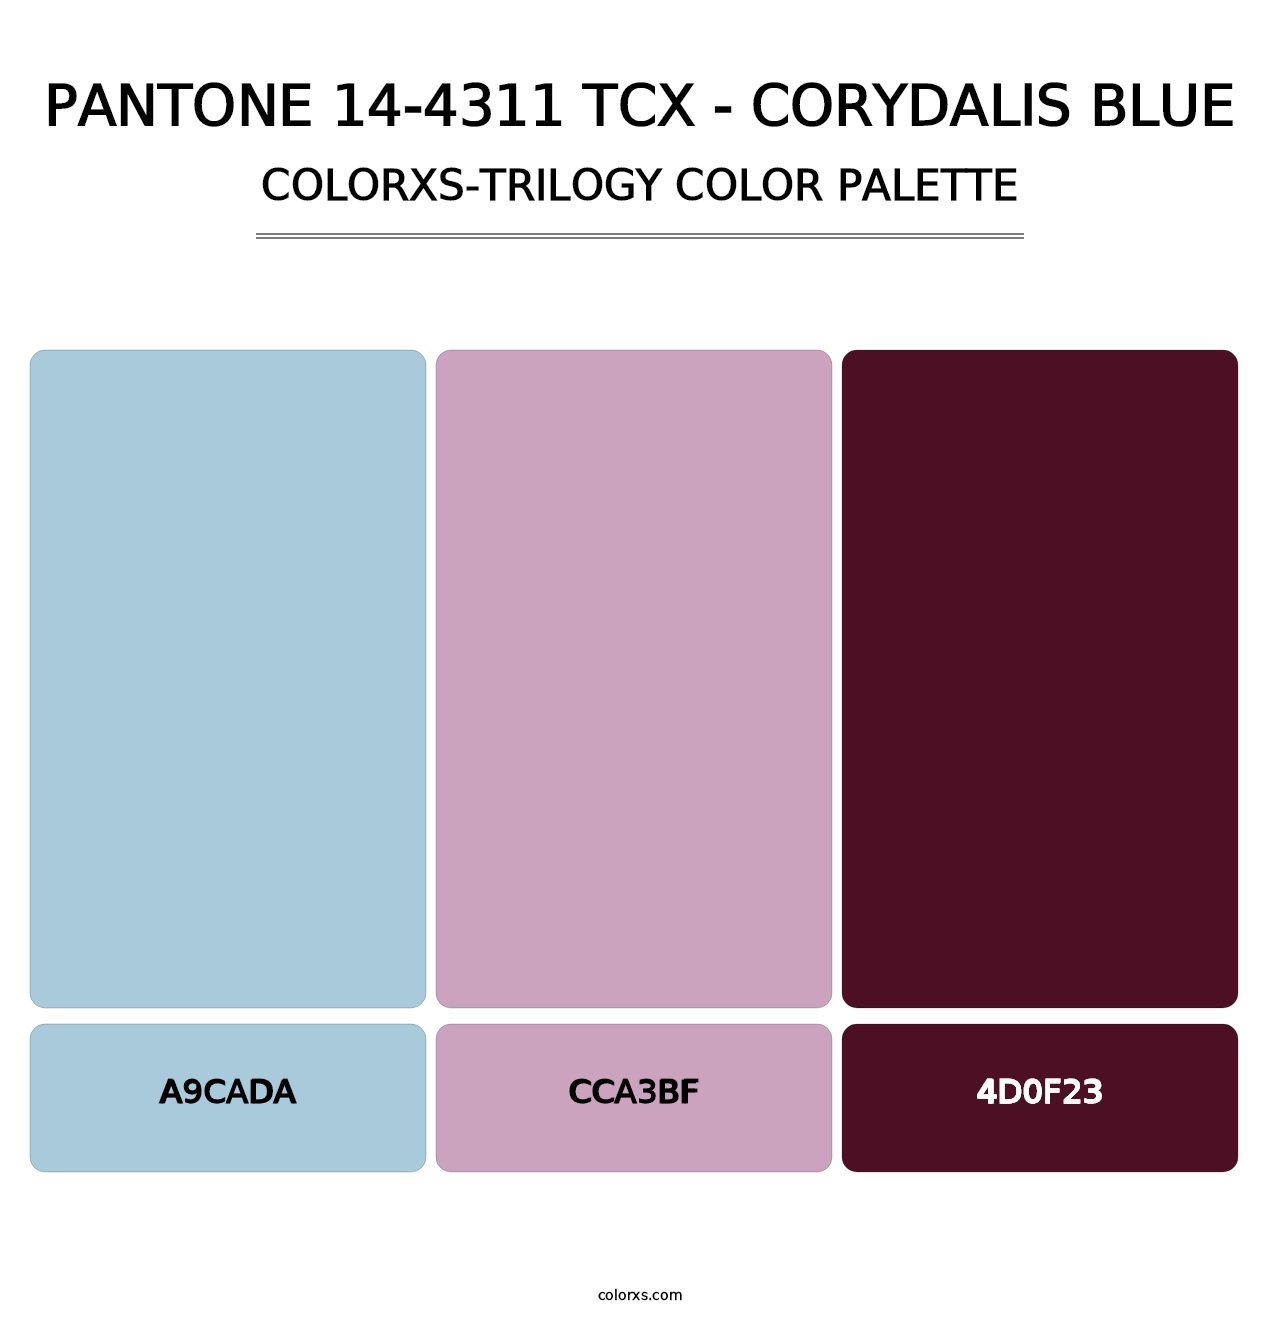 PANTONE 14-4311 TCX - Corydalis Blue - Colorxs Trilogy Palette